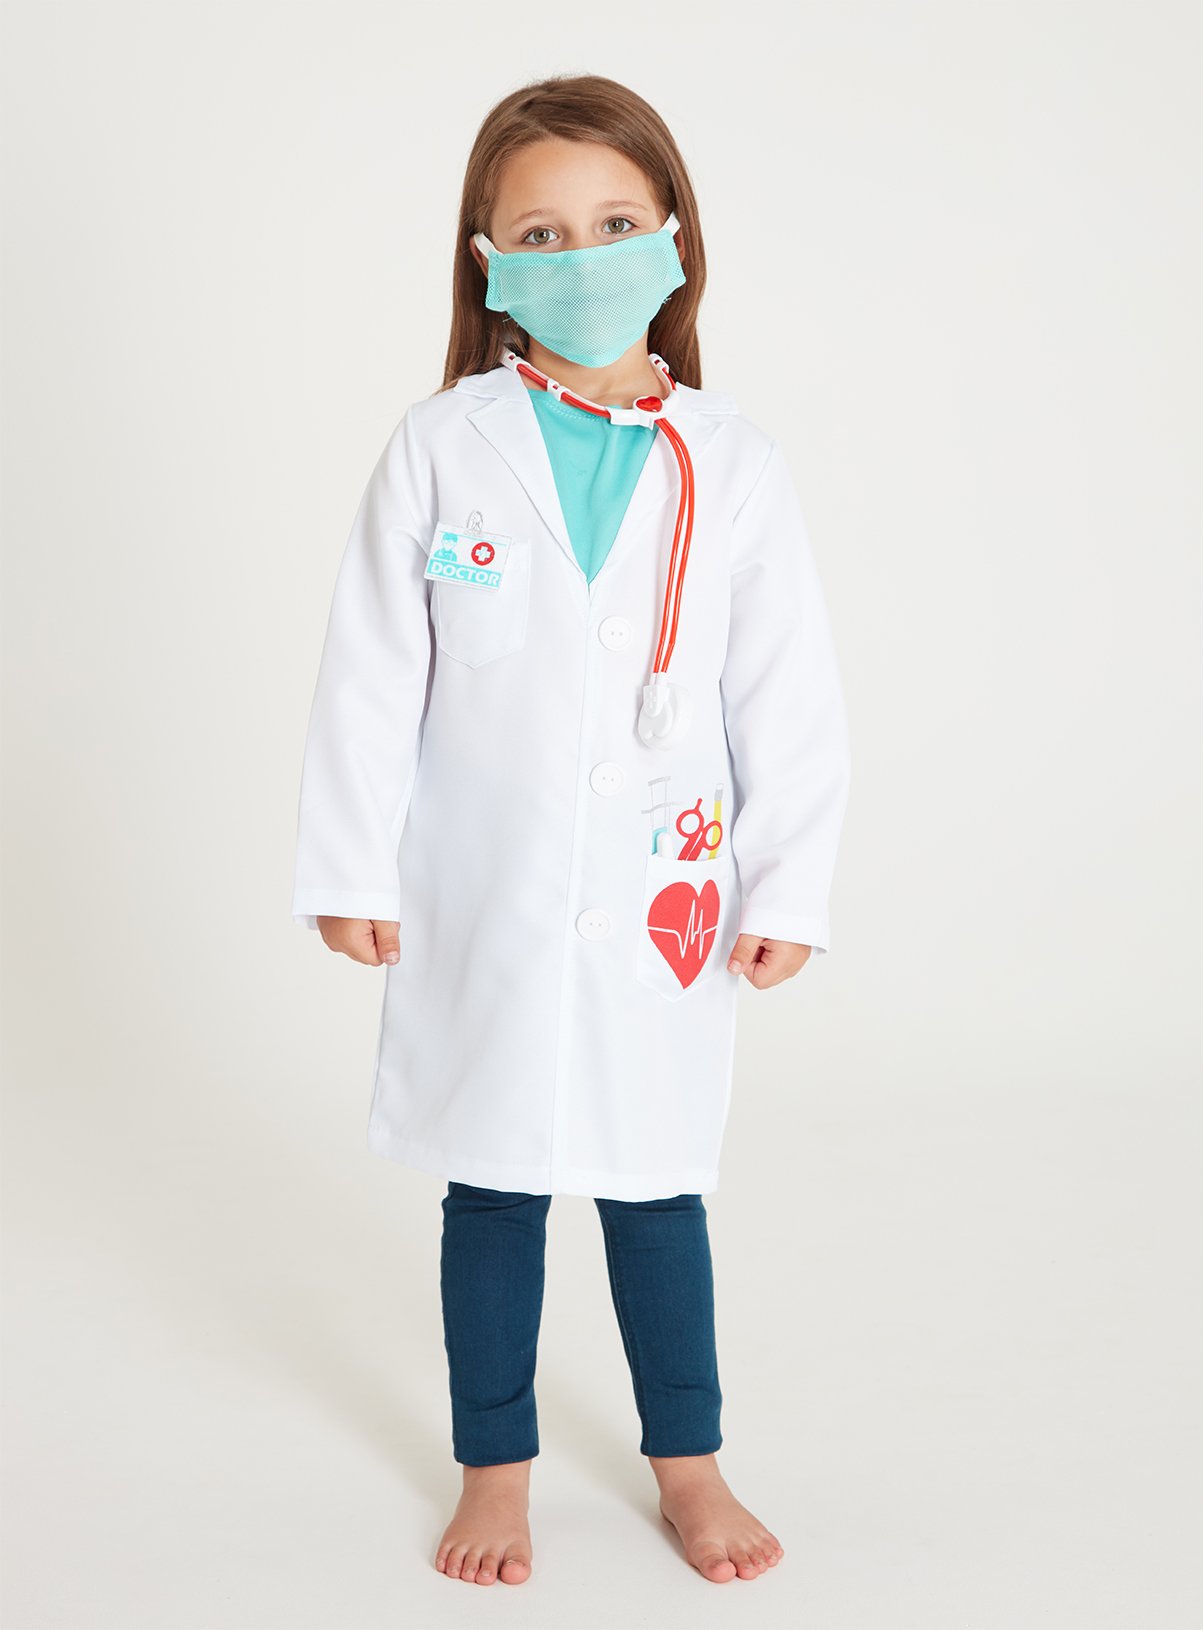 children's doctor dress up set